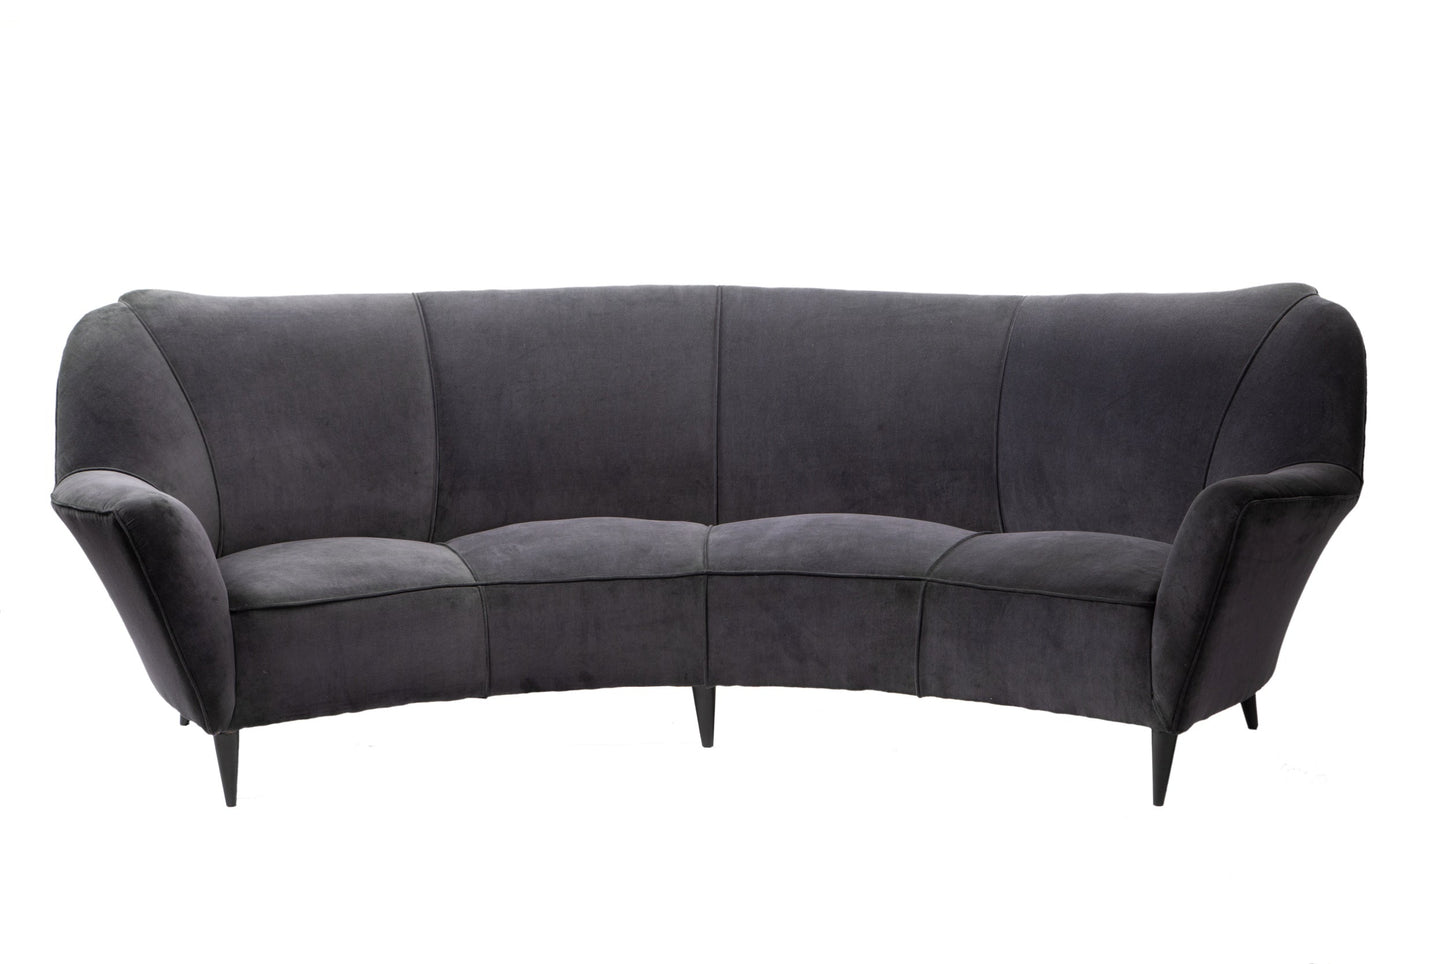 Curved sofa from the 50s in blueberry velvet